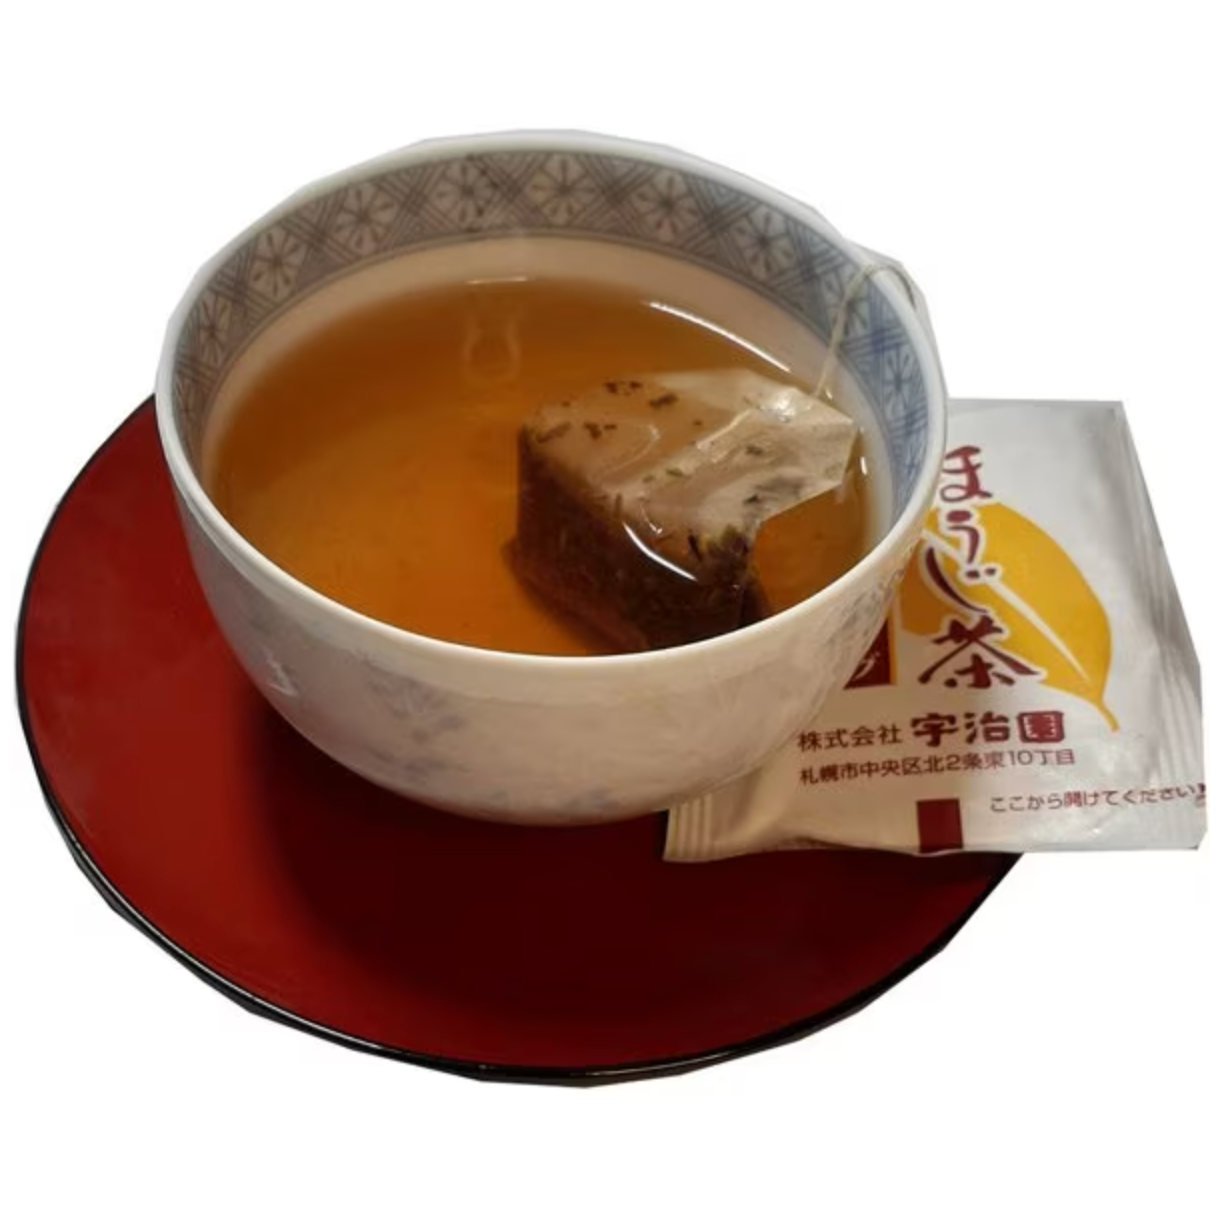 Ujien Japanese tea pot tea bags 40 bags